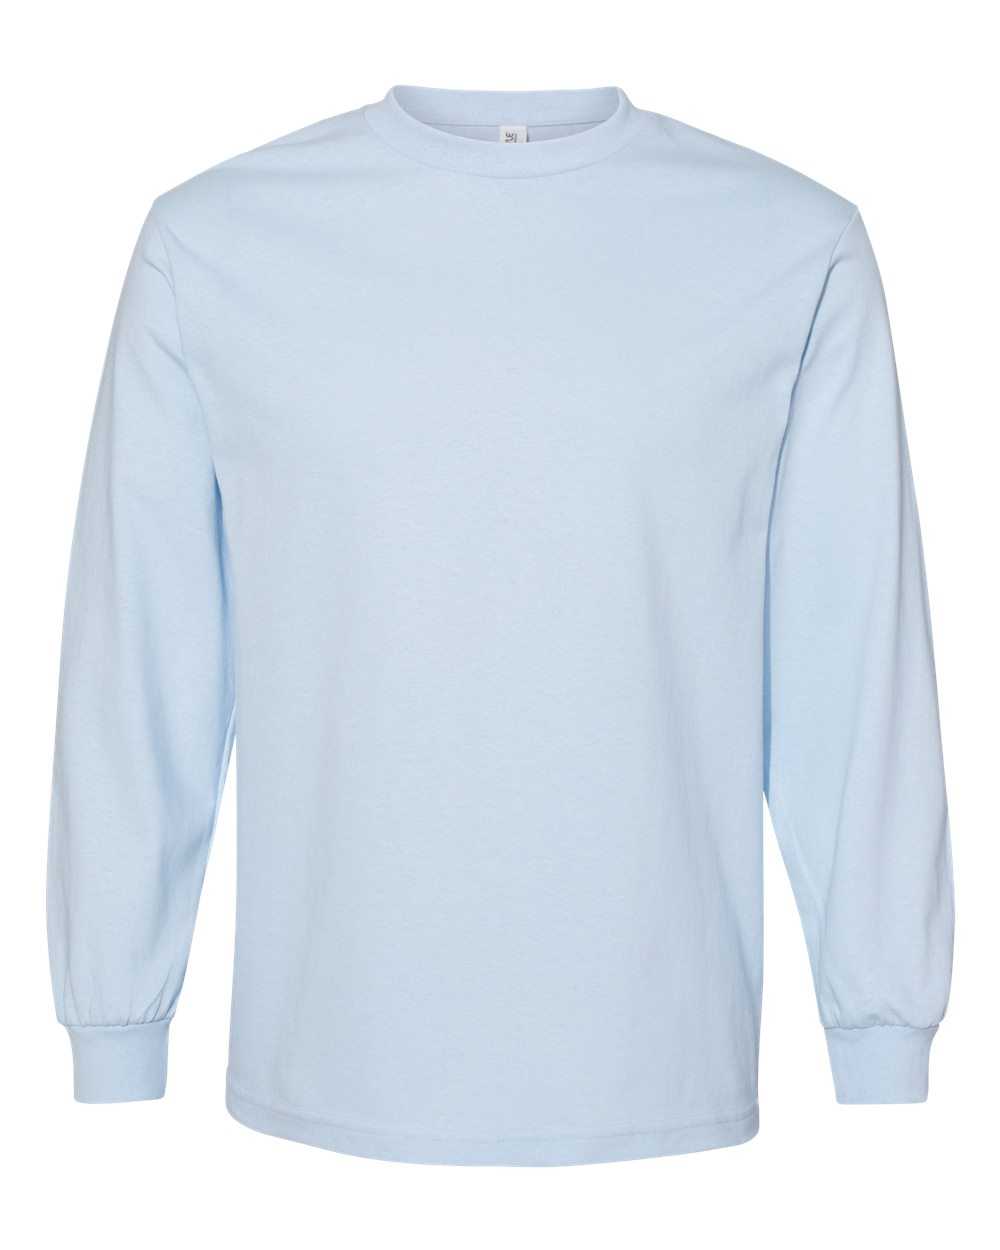 American Apparel 1304 Unisex Heavyweight Cotton Long Sleeve T-Shirt - Powder Blue - HIT a Double